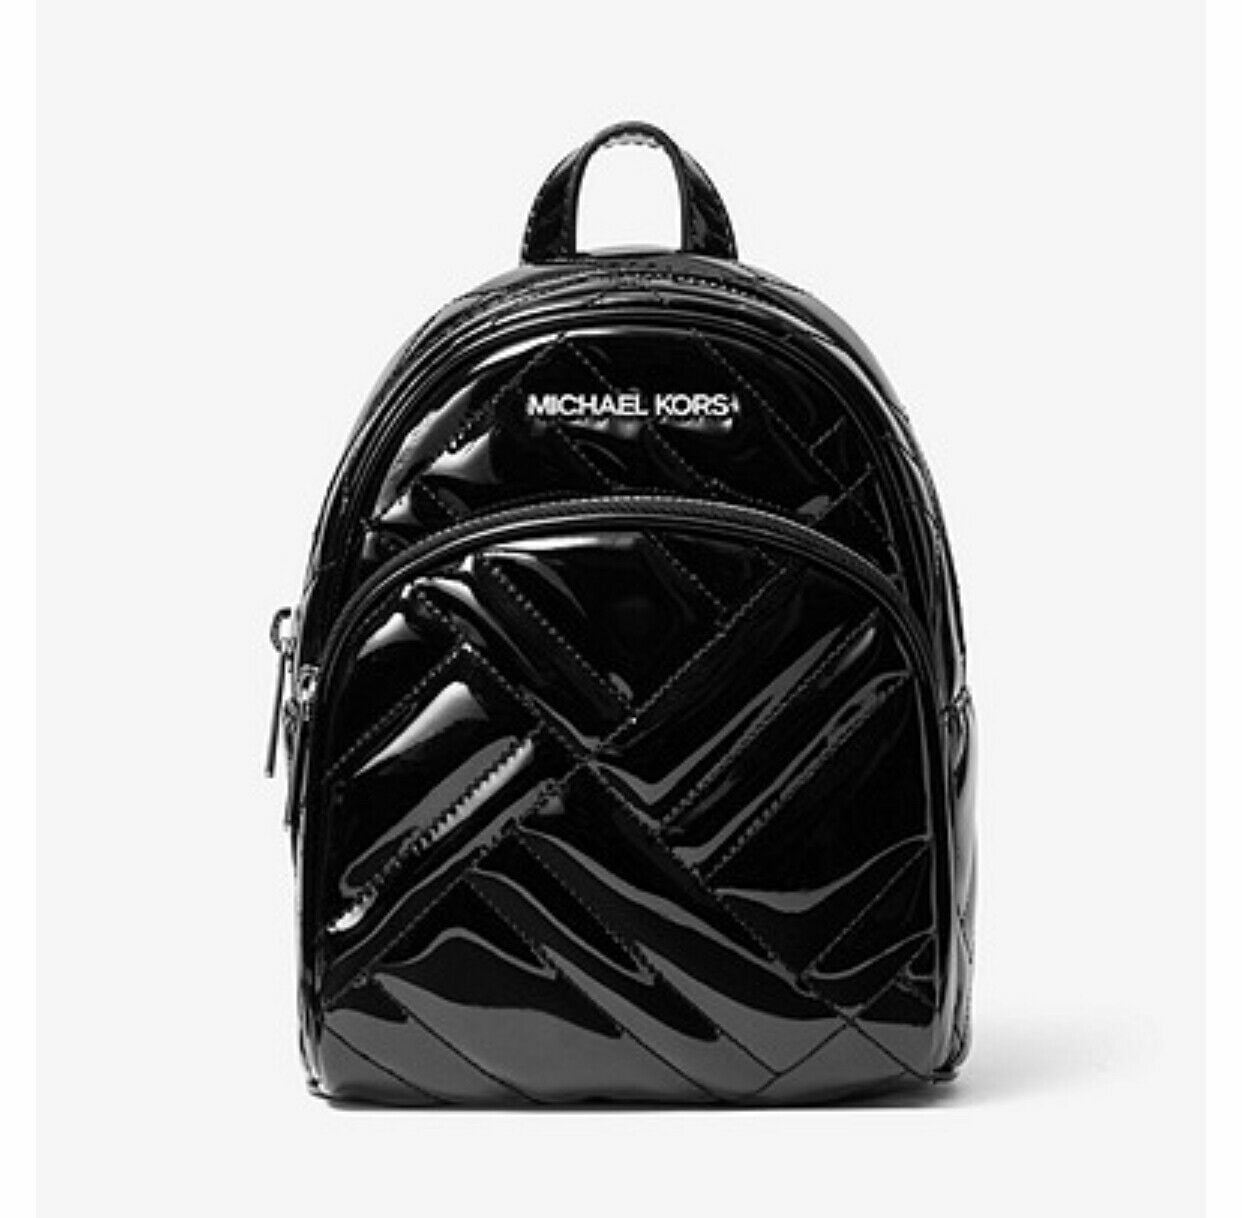 michael kors backpack leather black